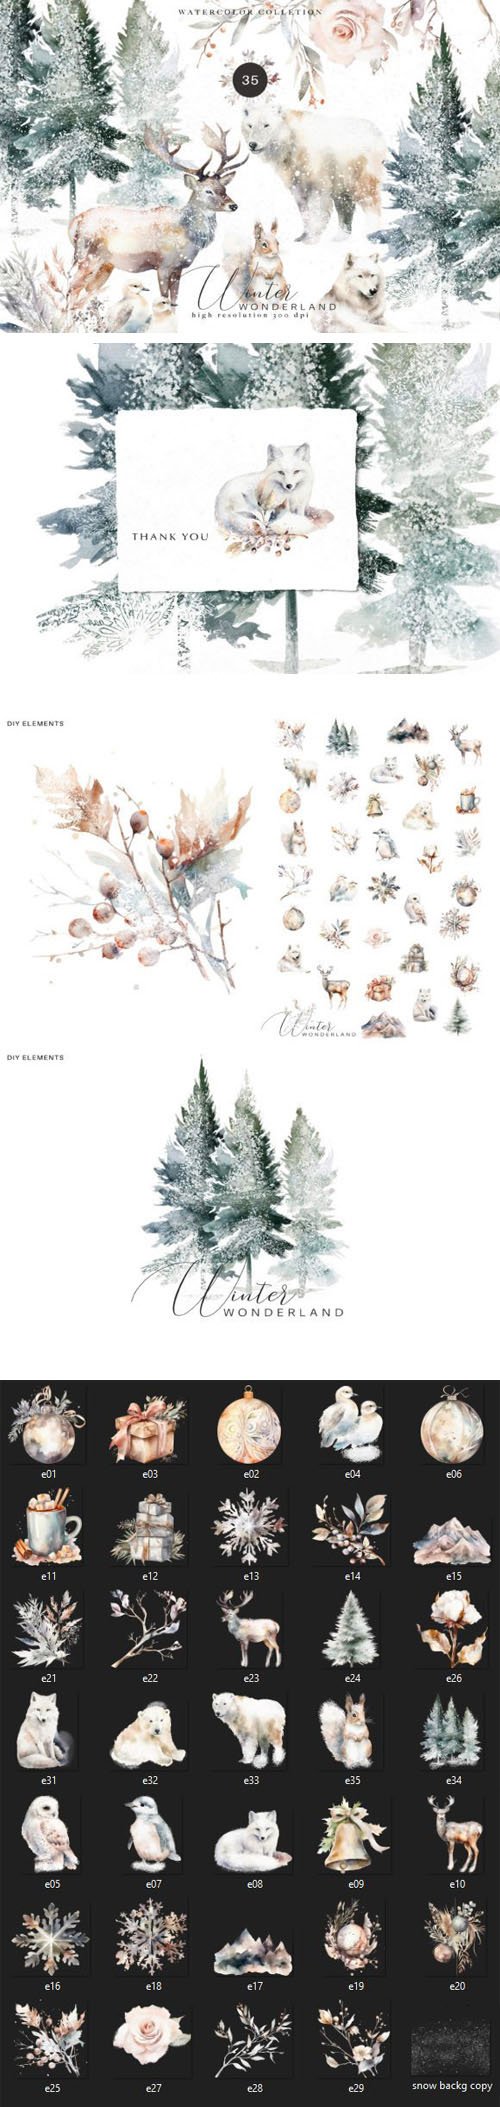 Evergreen - Winter Wonderland - Watercolor Collection